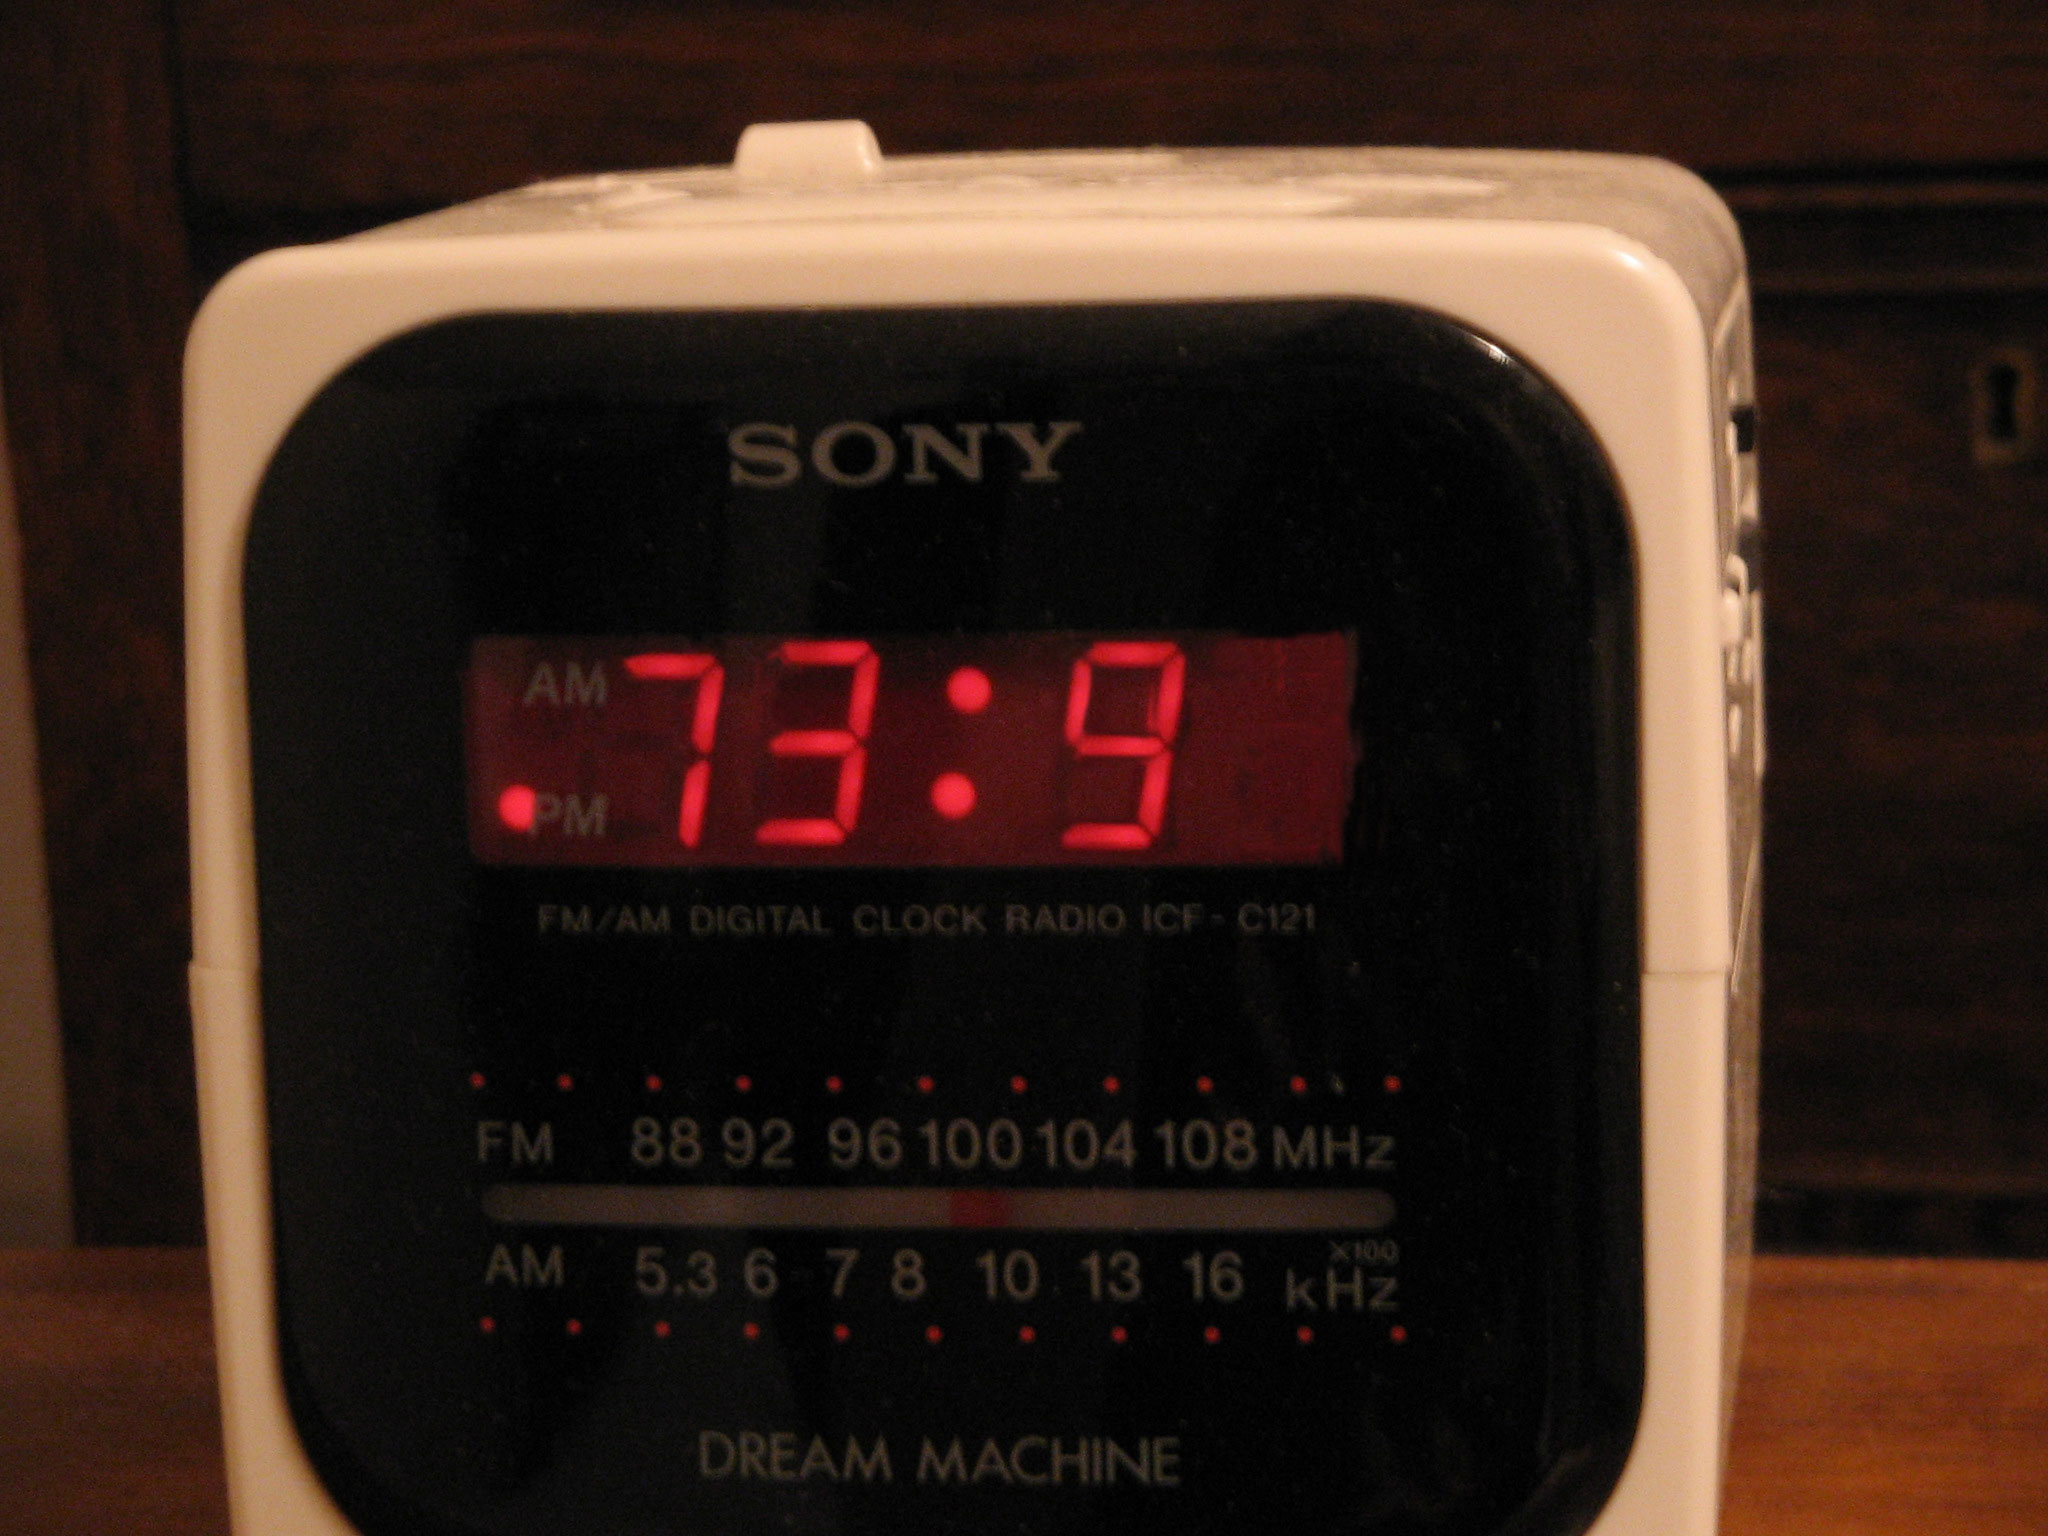 Image: A clock radio reading 73:9